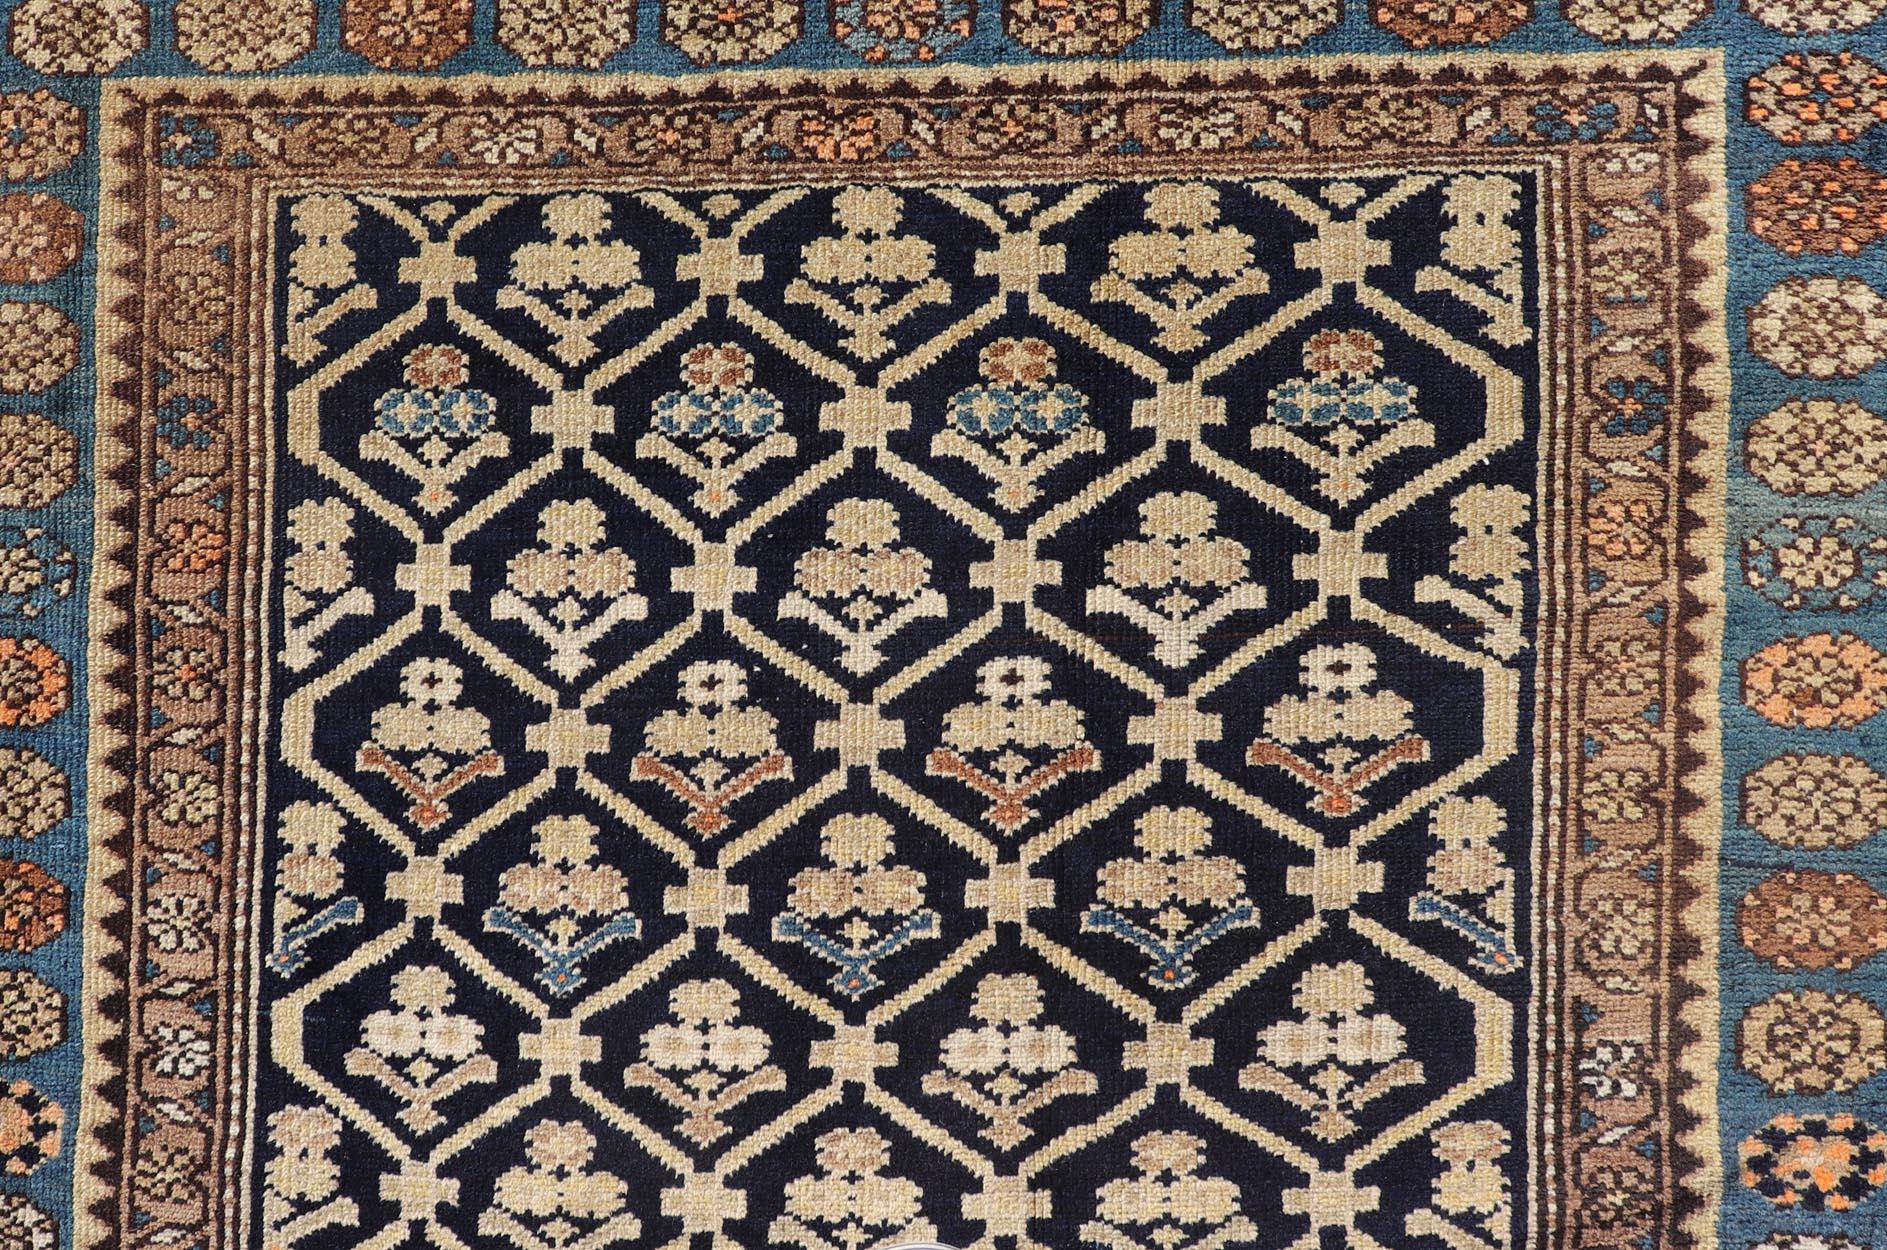 Blue, dark blue, orange, and tan Malayer antique rug Persian, Keivan Woven Arts / rug EMB-9710-P13897, country of origin / type: Iran / Malayer, circa 1920.

Measures: 3'9 x 5'4.